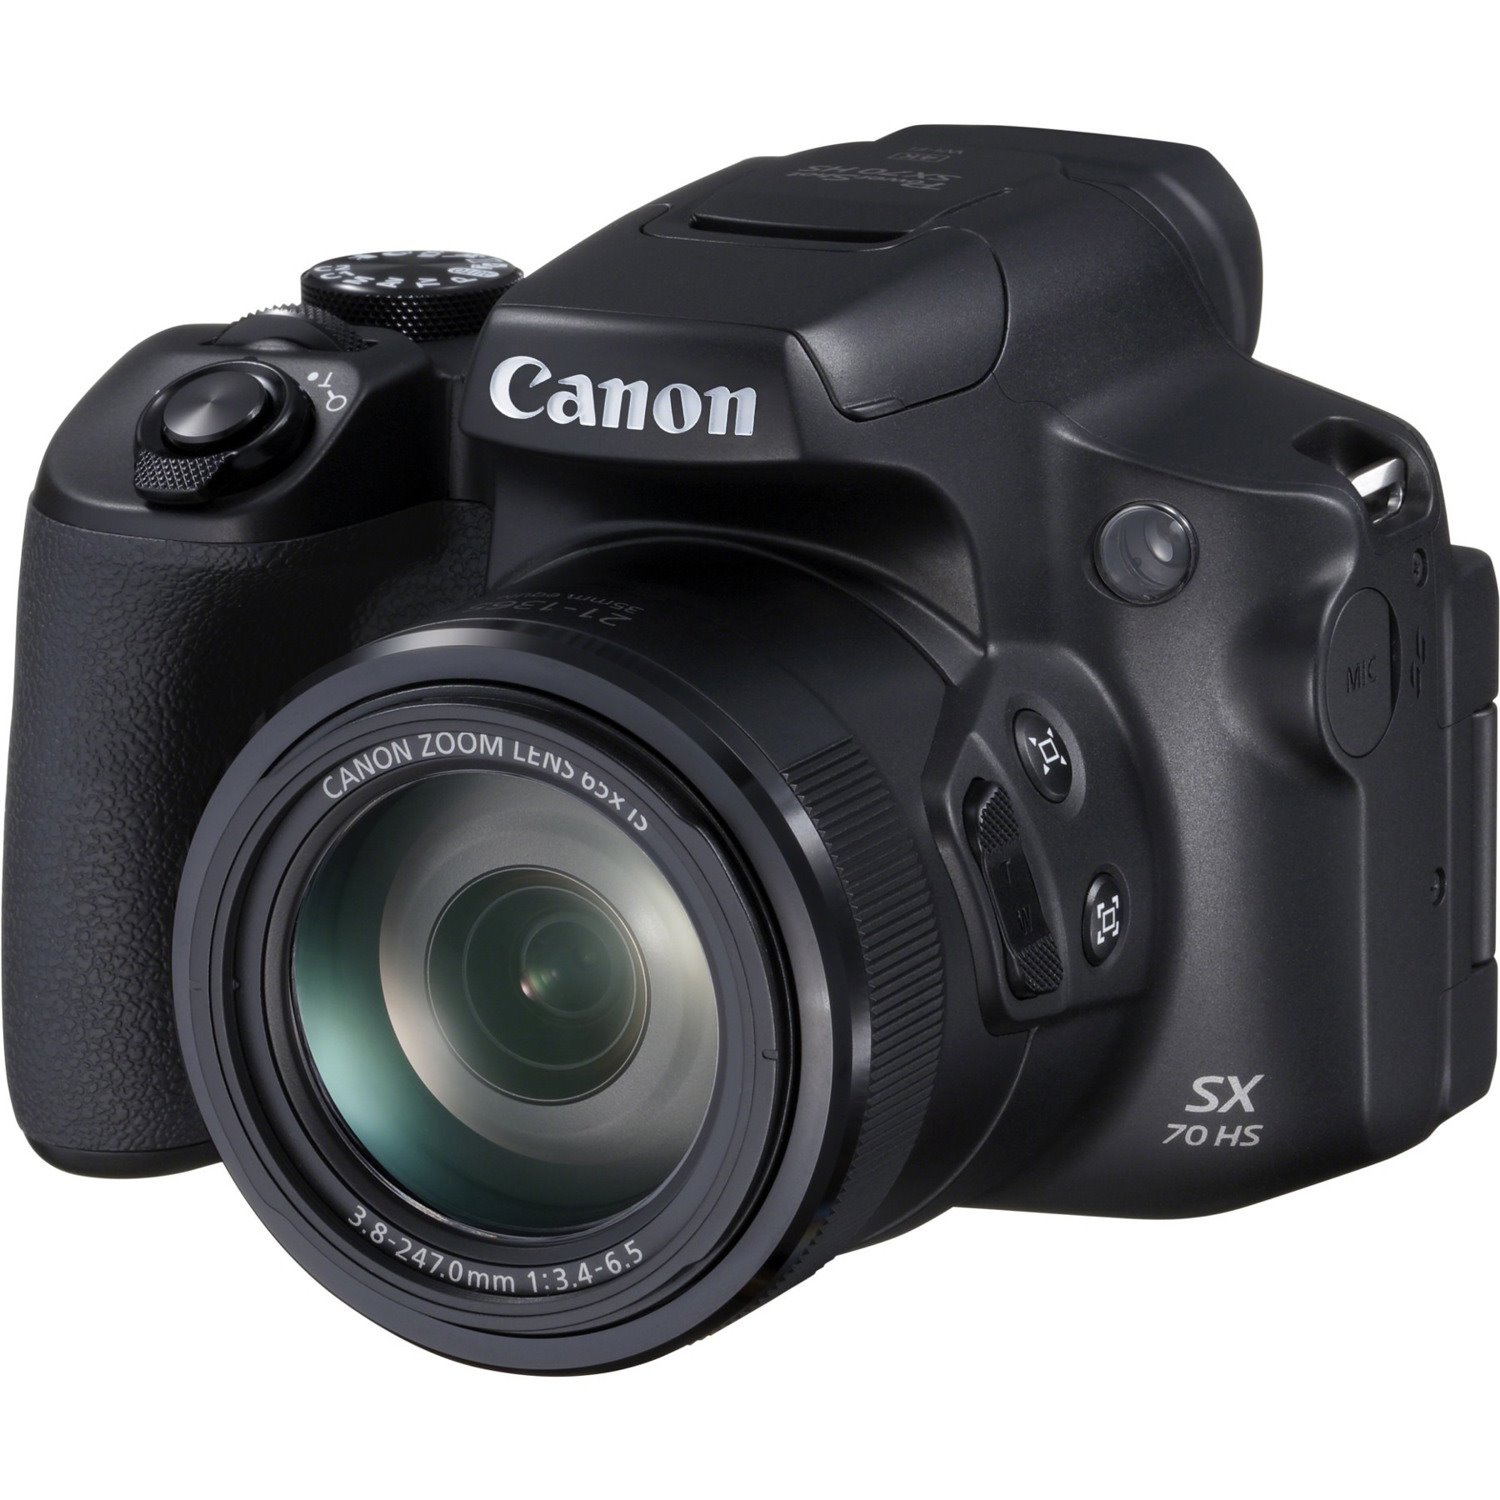 Canon PowerShot SX70 HS 20.3 Megapixel Bridge Camera - Black